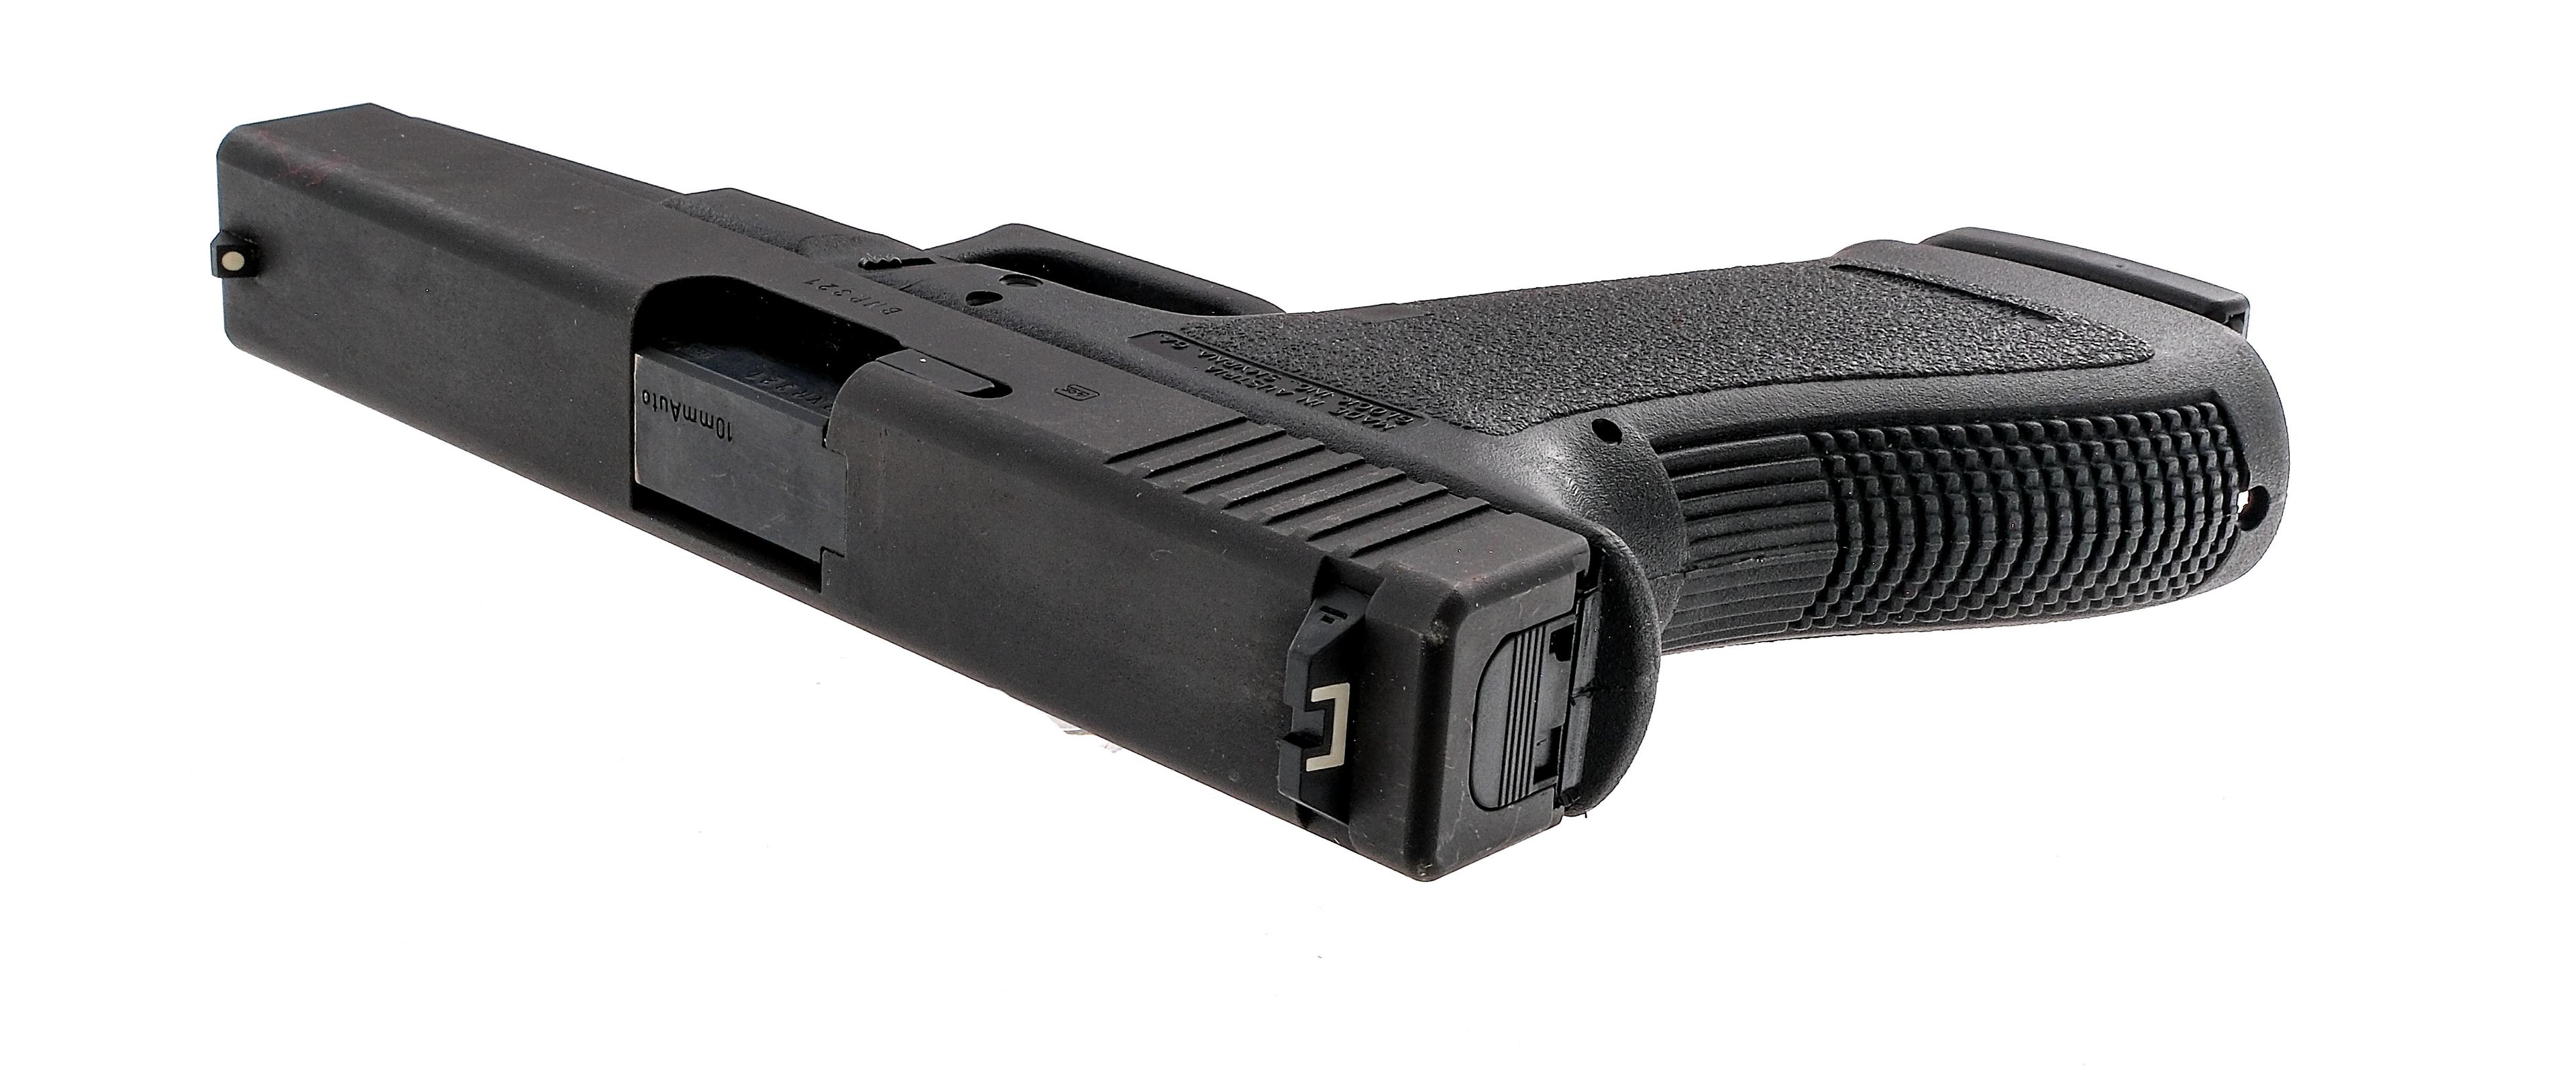 Glock 20 Gen 2 10mm Semi Auto Pistol